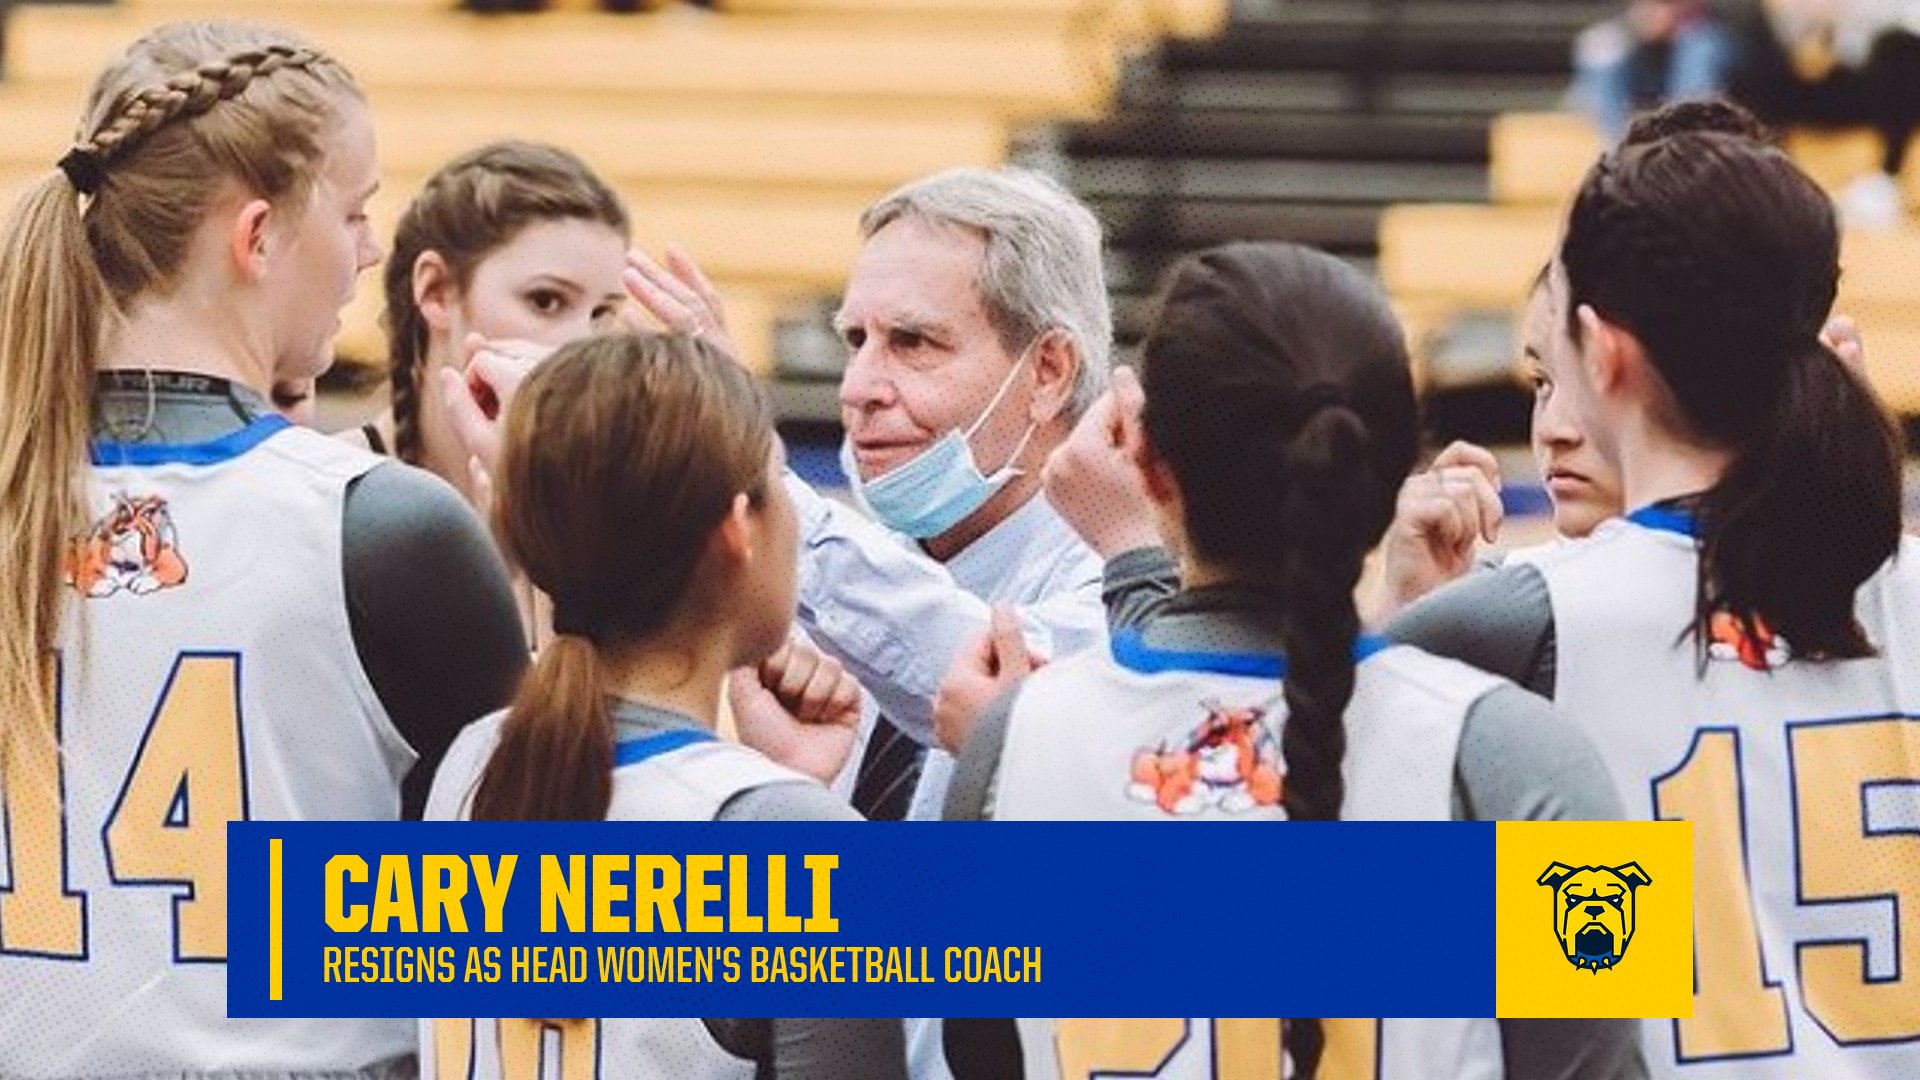 Cary Nerelli Resigns as Head Women's Basketball Coach